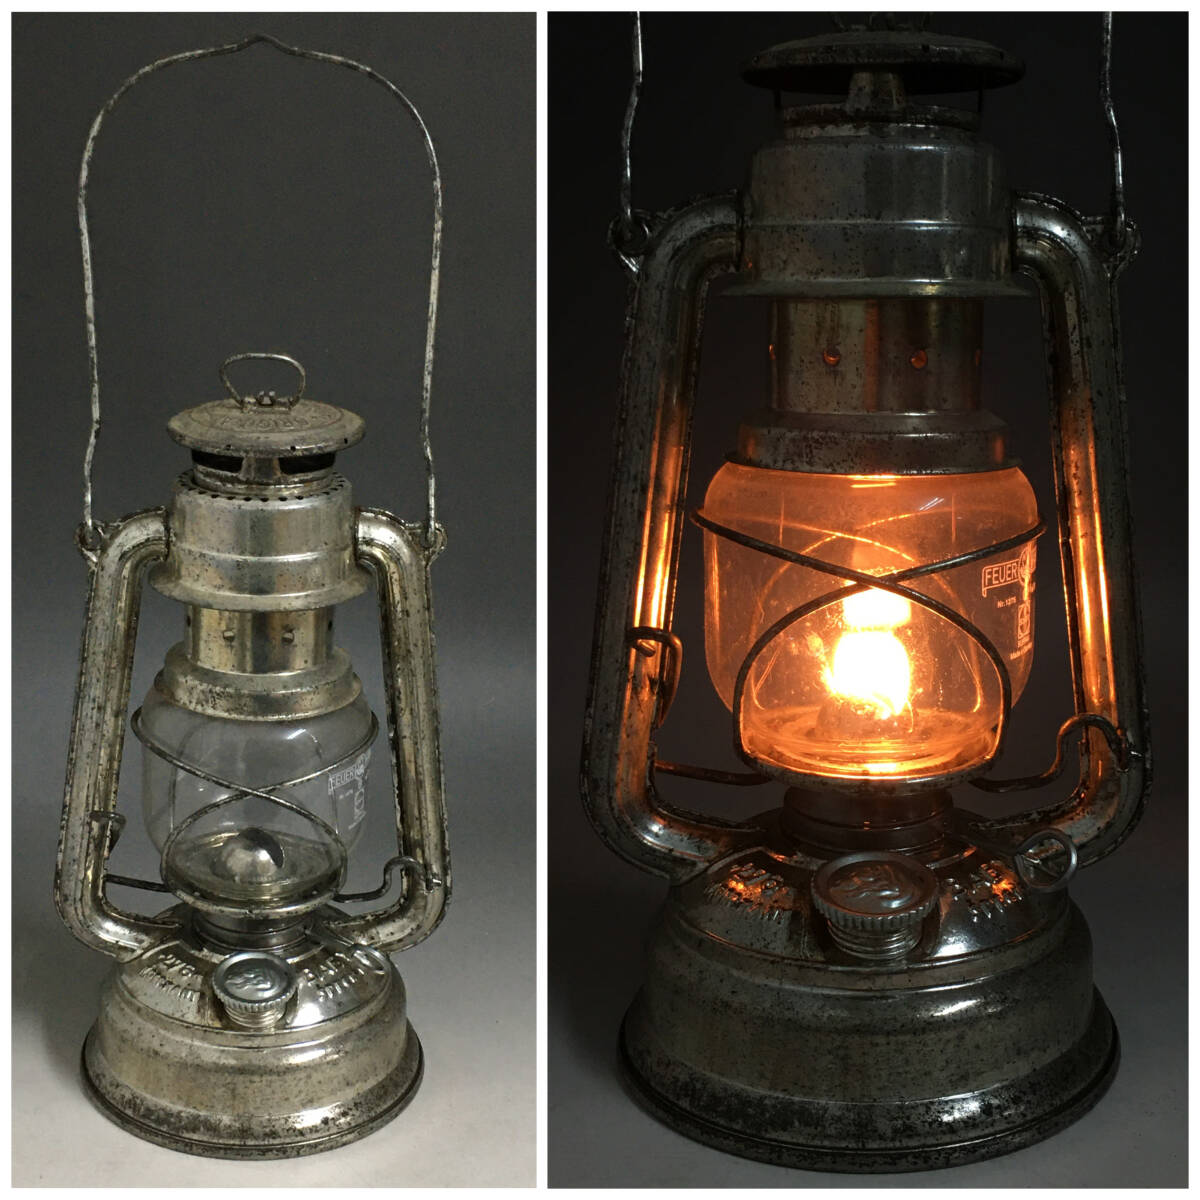 ut2/77 Vintage FEUERHAND 276 Bay Be special oil lantern w.germany made f.a hand kerosene Hurricane lantern camp 0*